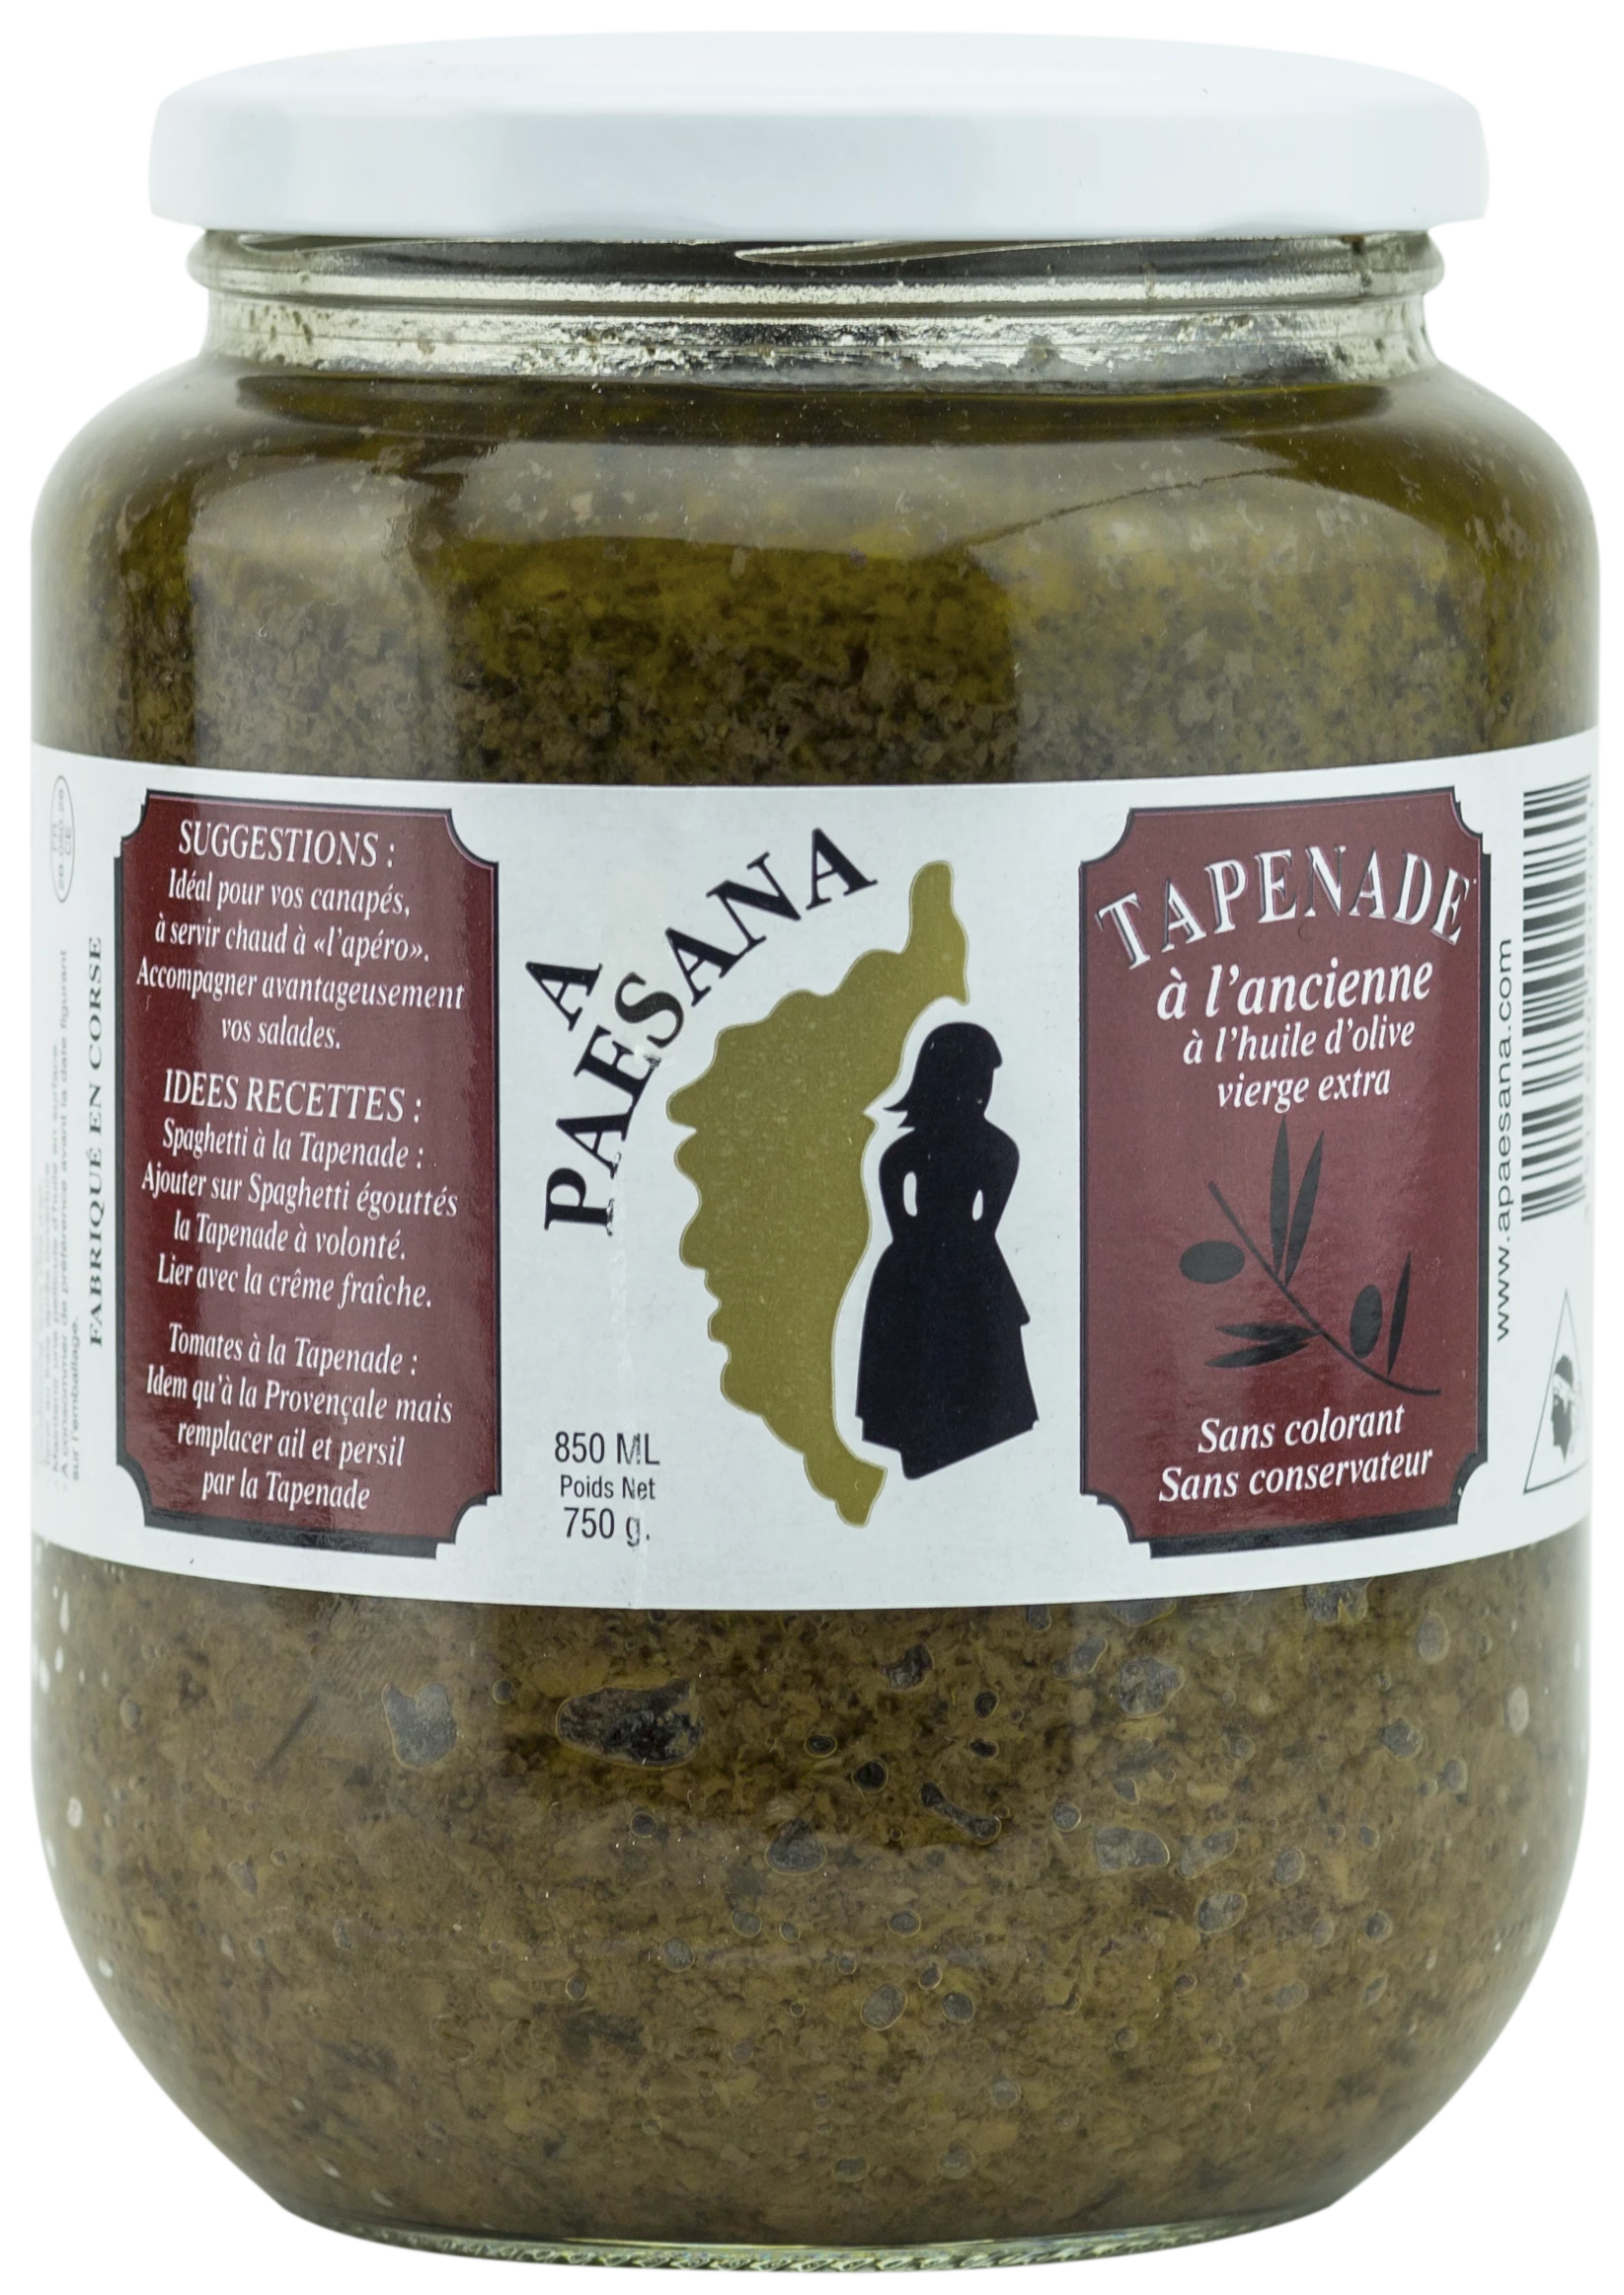 Altmodische Tapenade mit nativem Olivenöl extra, 750 g - A PAESANA